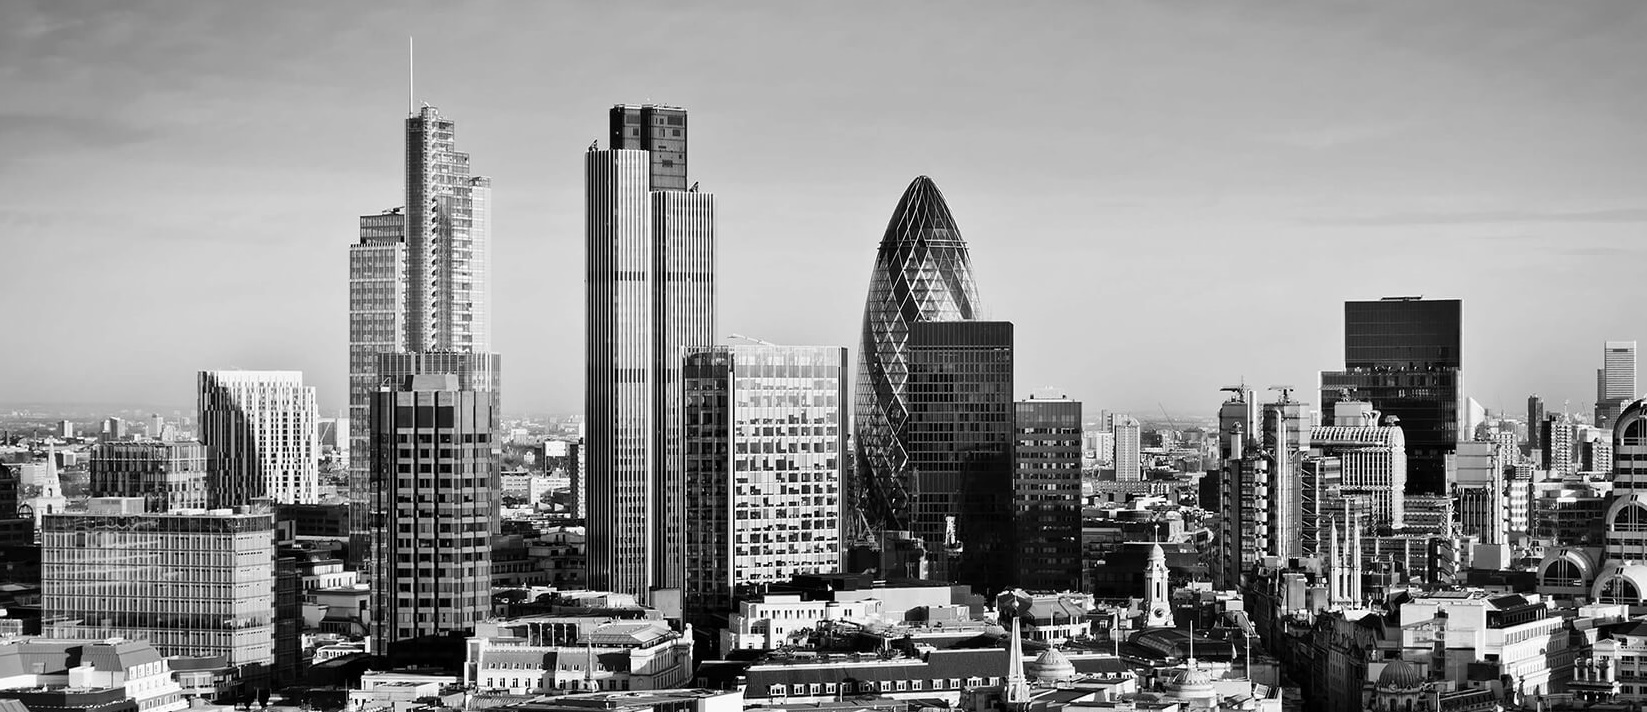 Breakfast Briefings on European Real Estate Investments - 13 November 2019, London